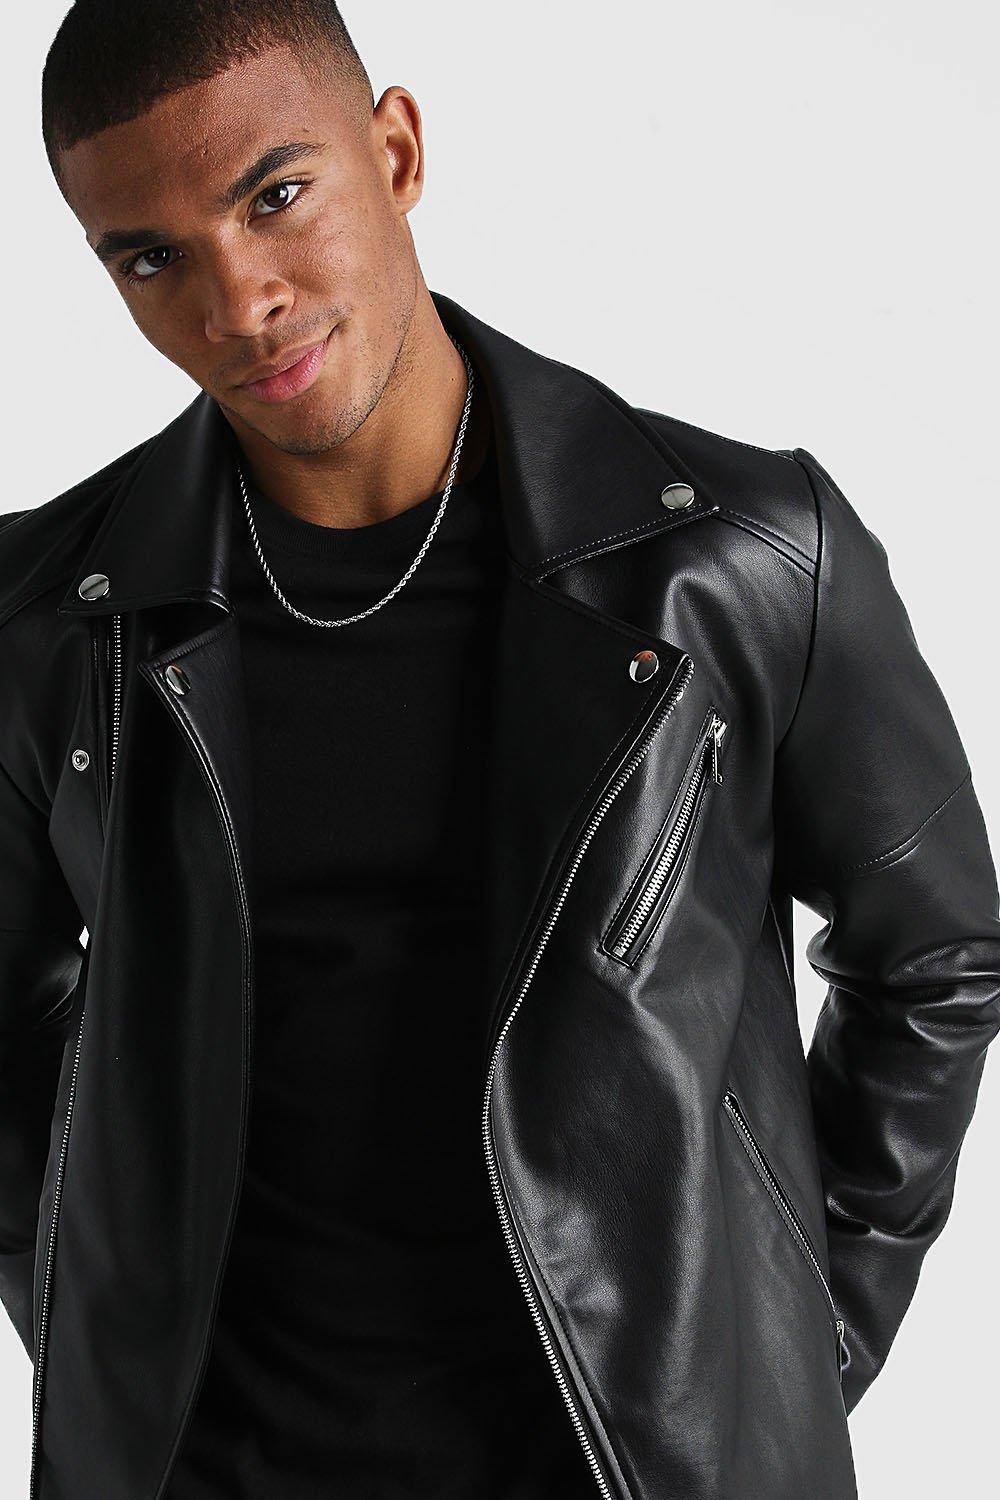 boohoo Faux Leather Moto Jacket - Black - Size XL